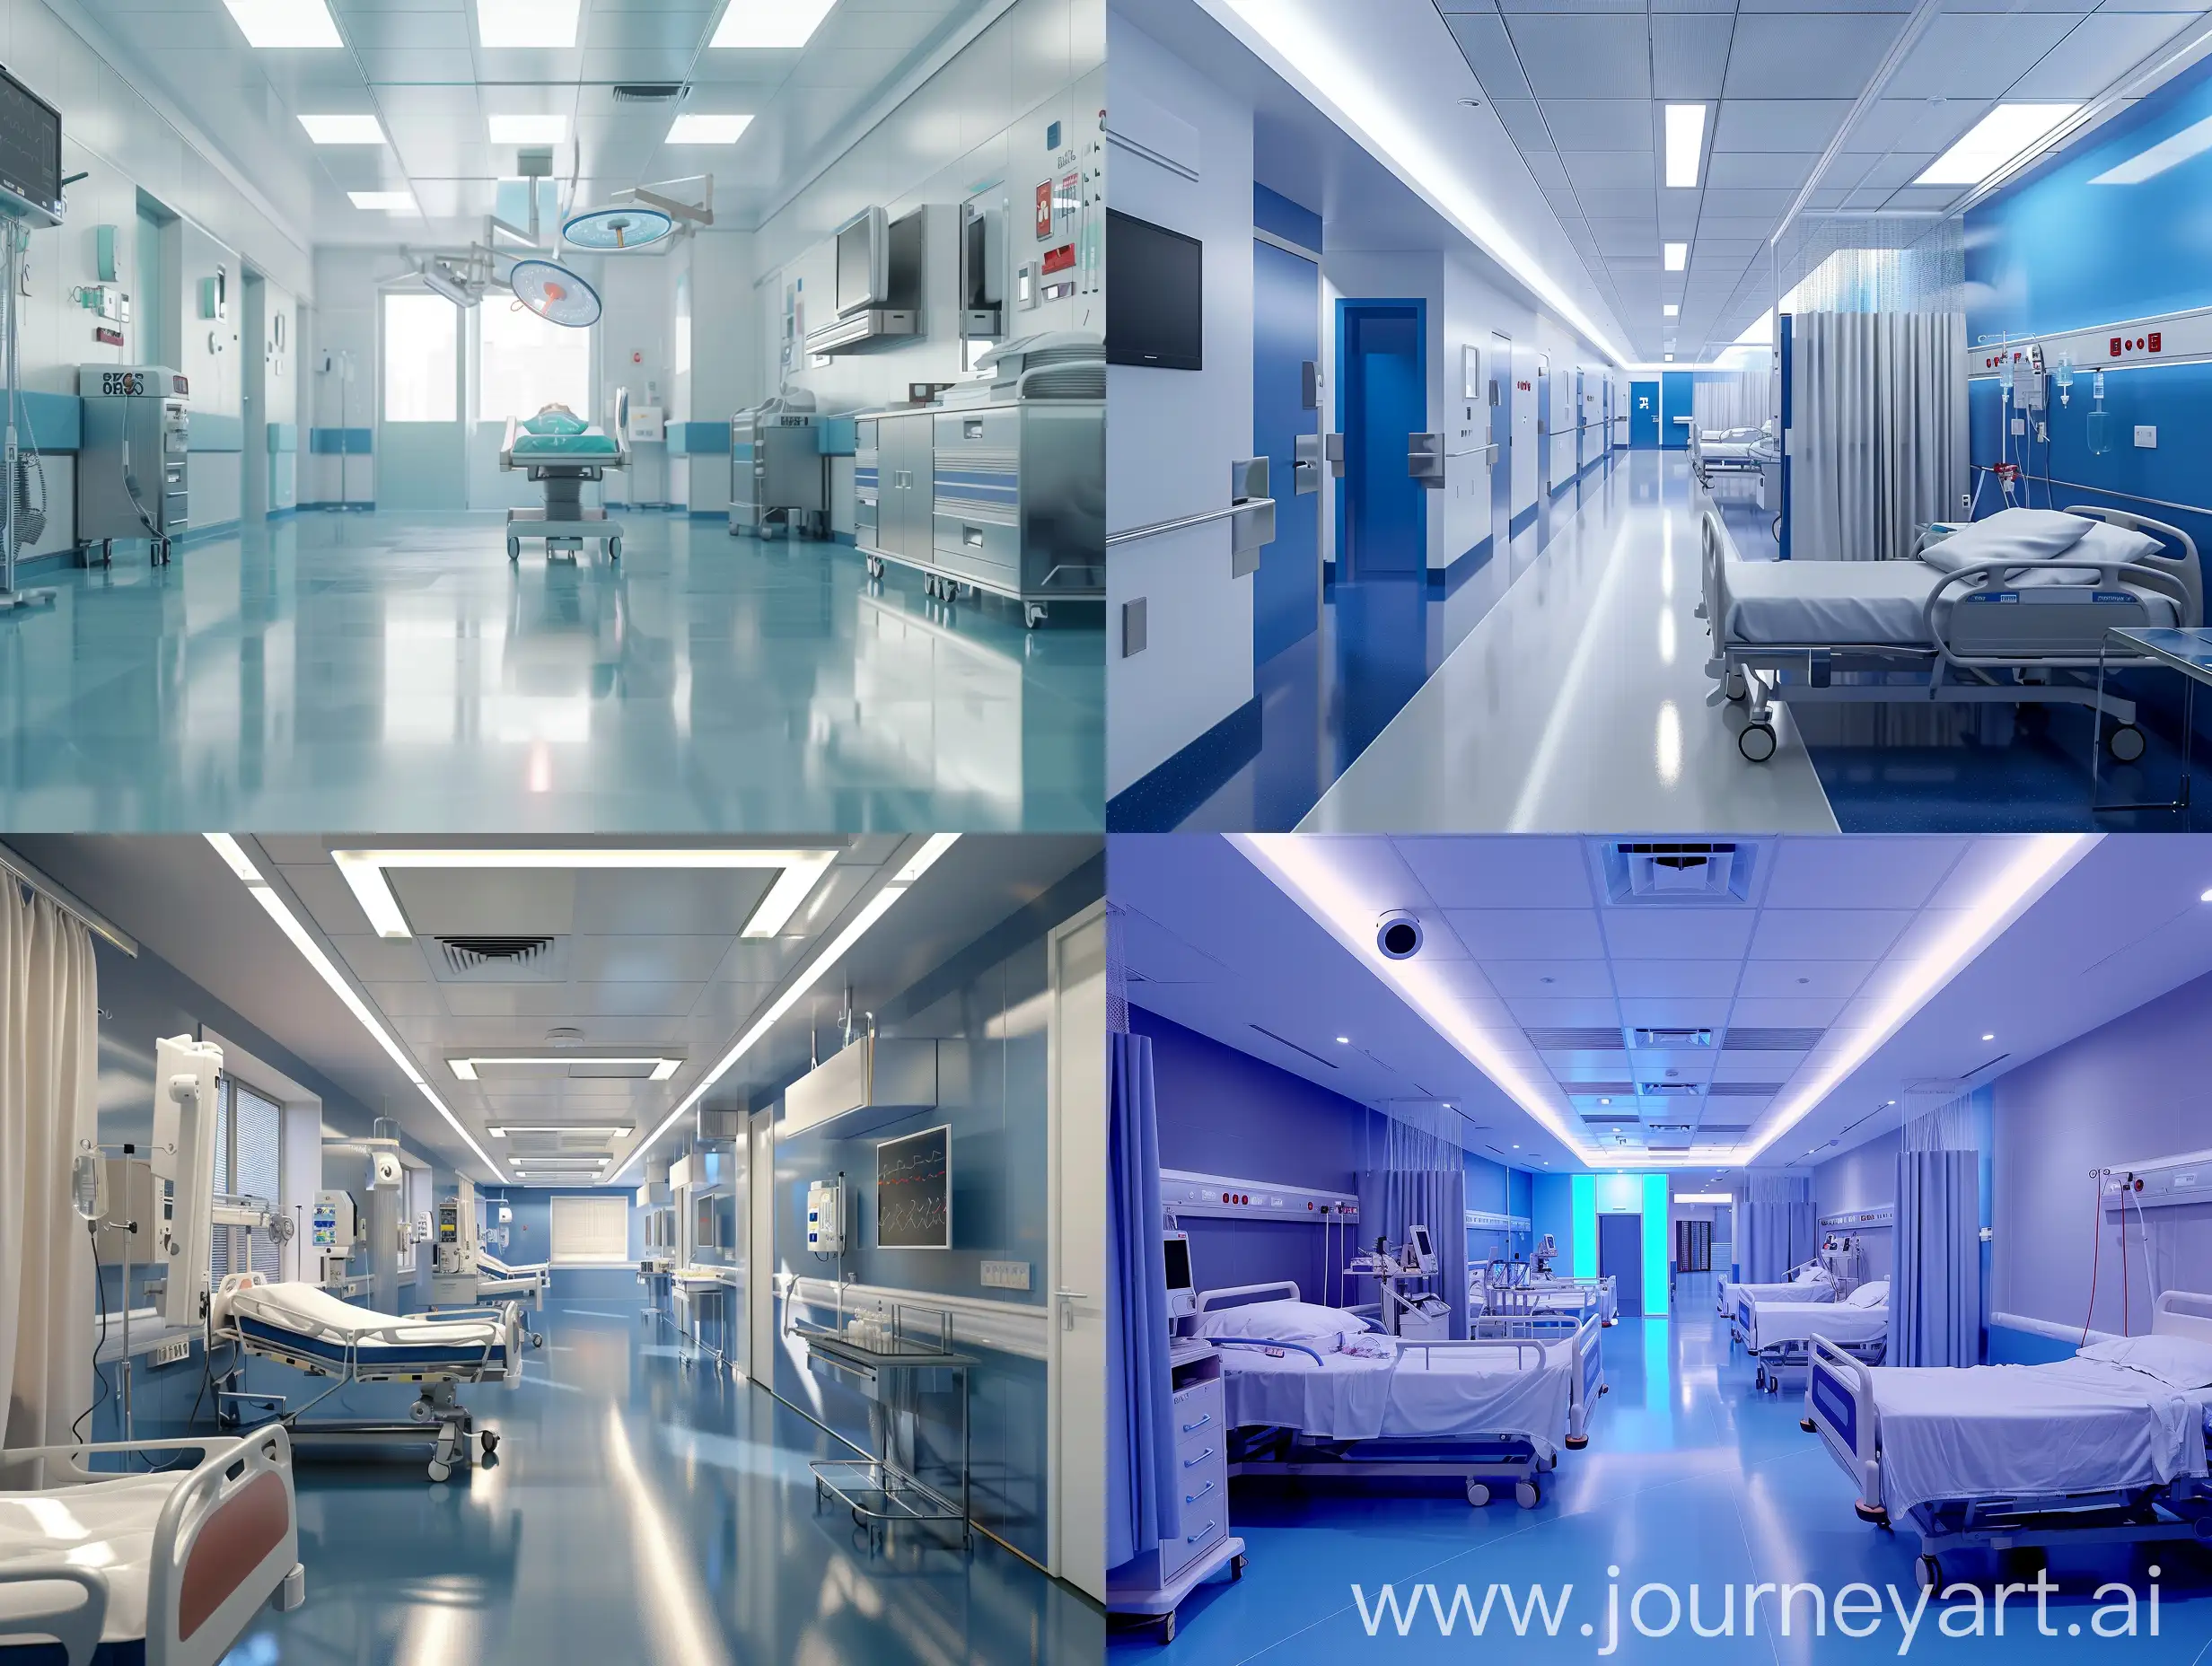 Hyperrealistic-Hospital-Clinic-Scene-in-Professional-HD-Quality